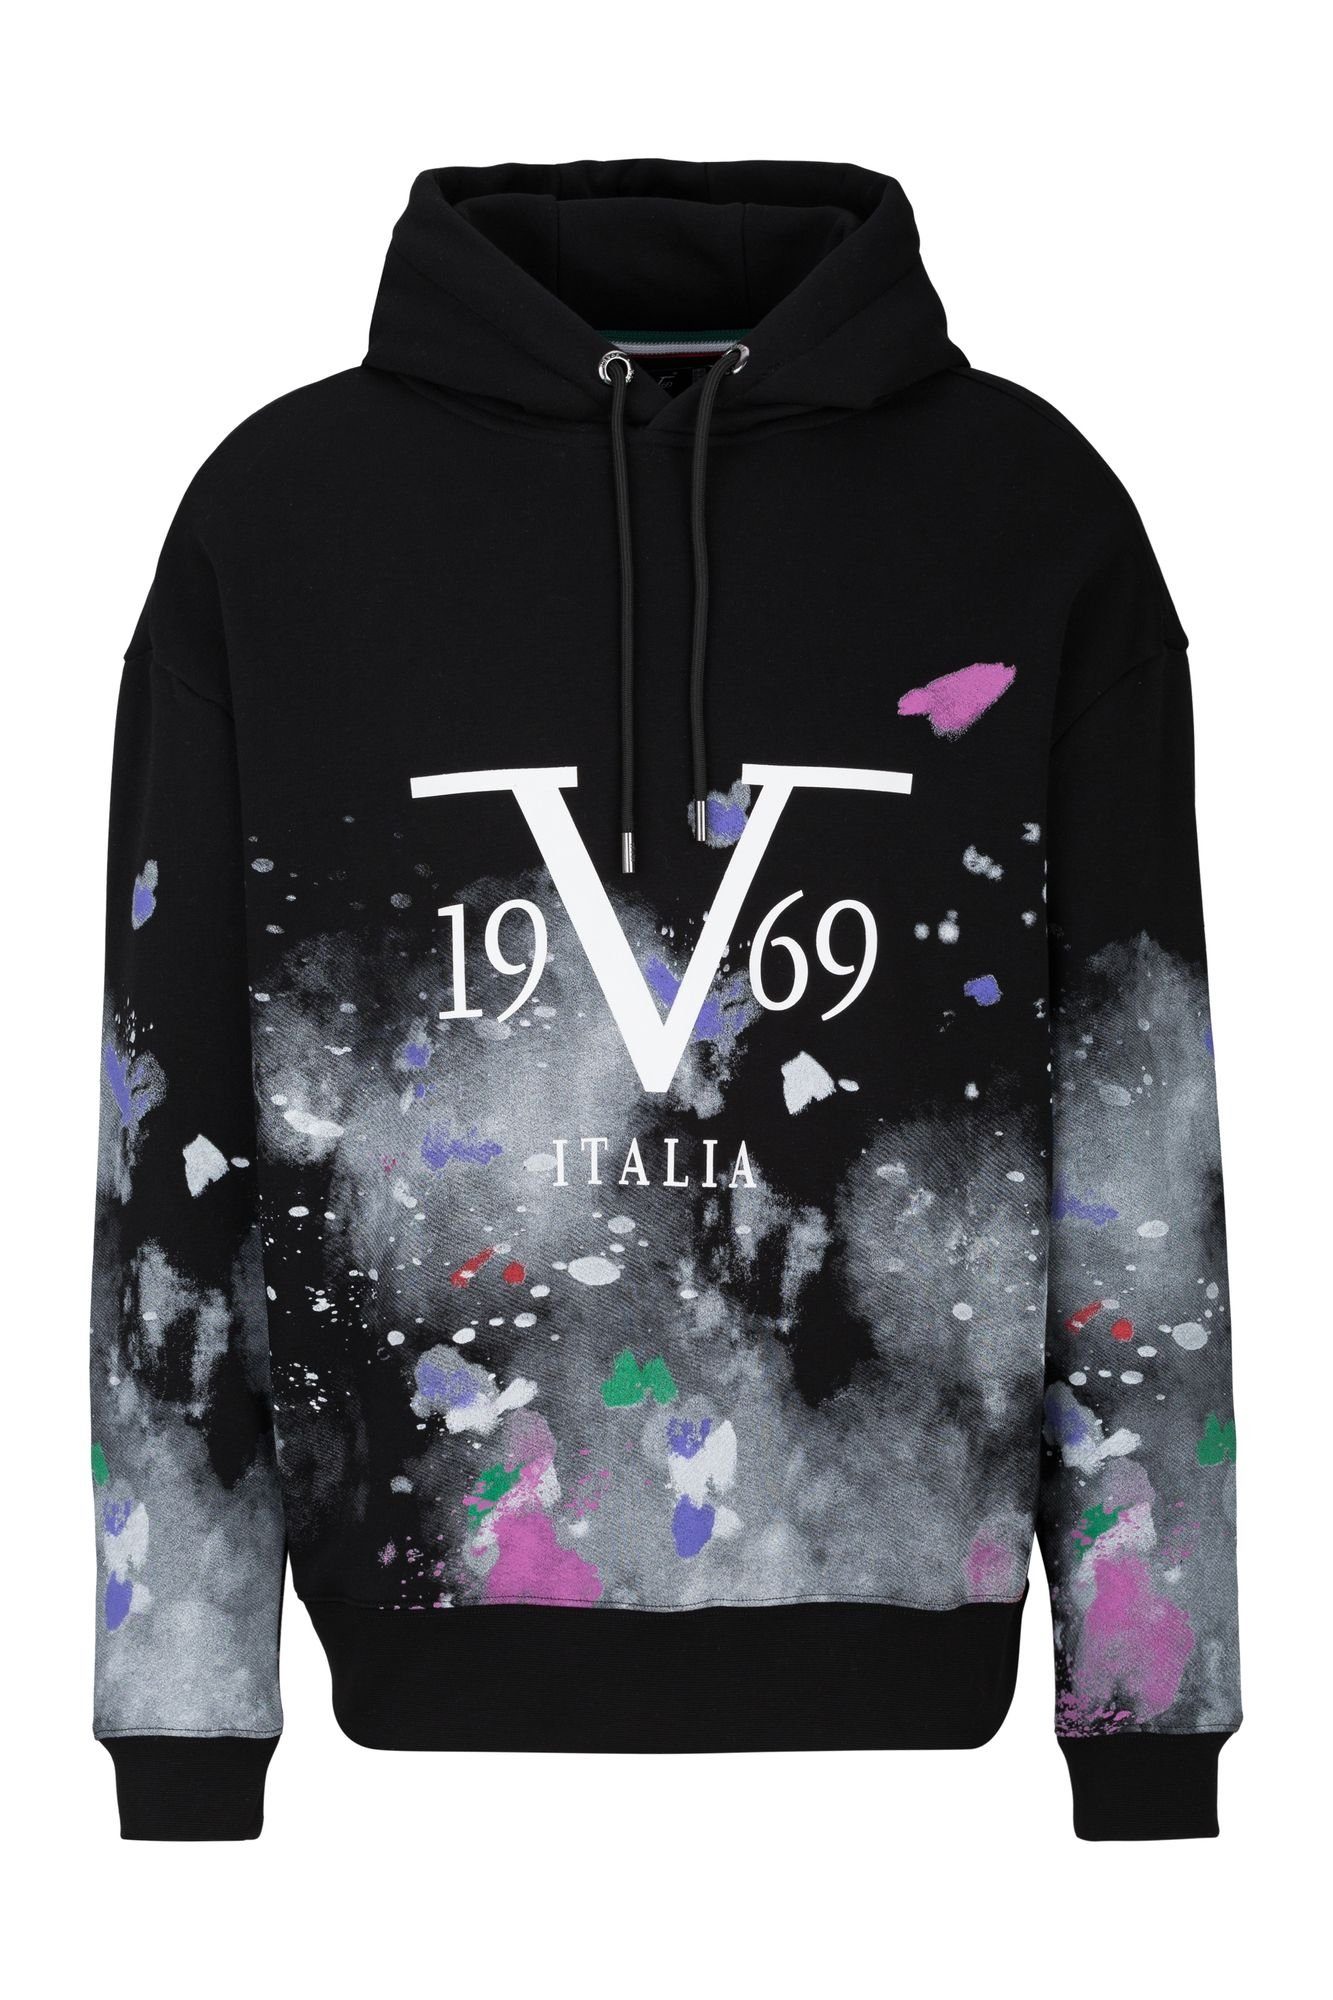 19V69 Italia by Versace Hoodie by Versace Sportivo SRL - Carlo | Sweatshirts